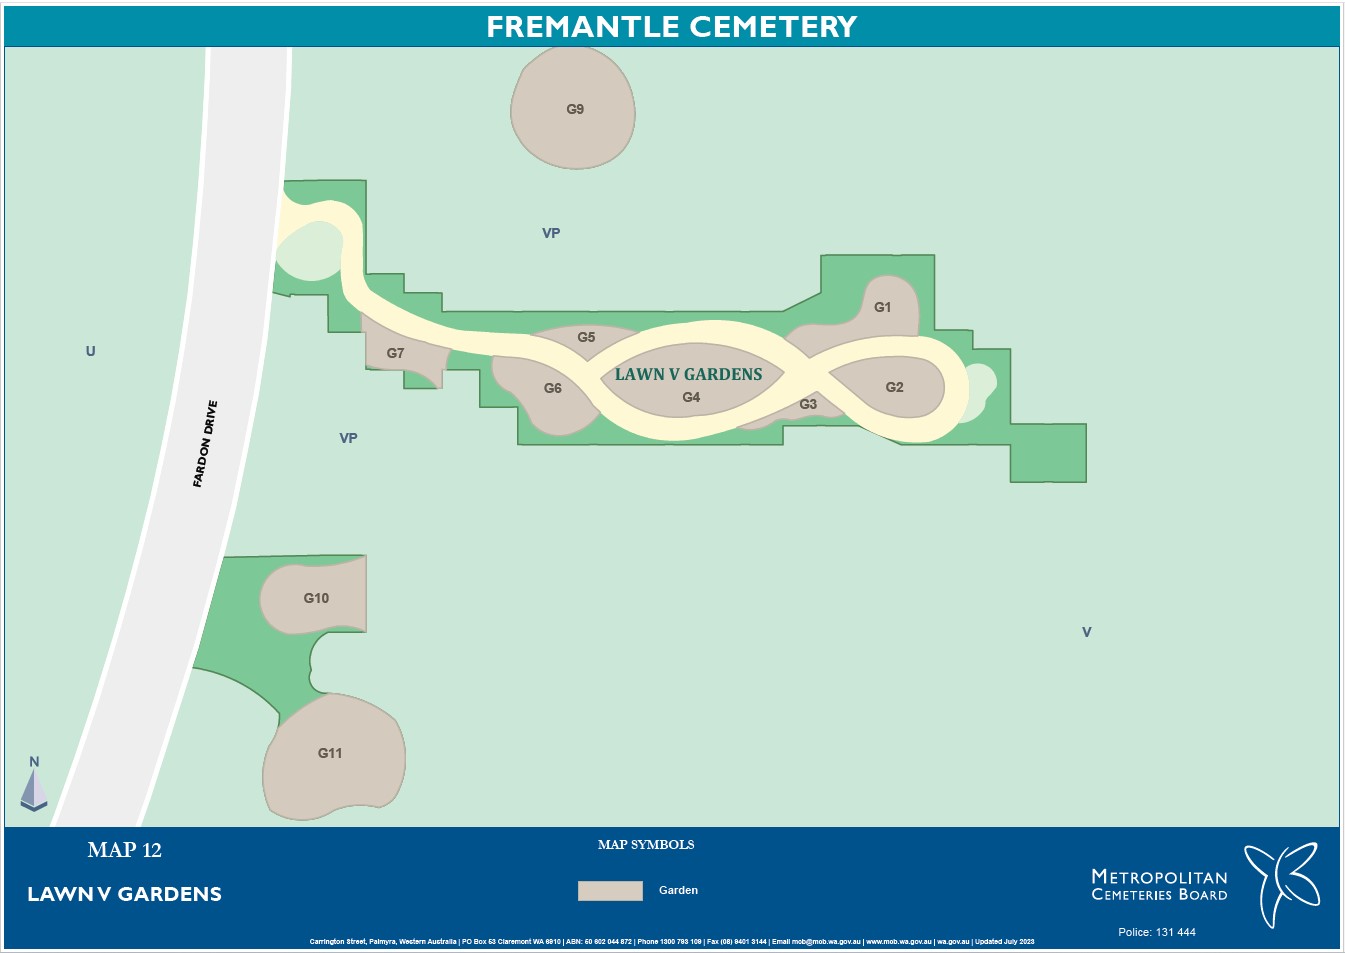 Map 12 Lawn V Gardens Fremantle Cemetery